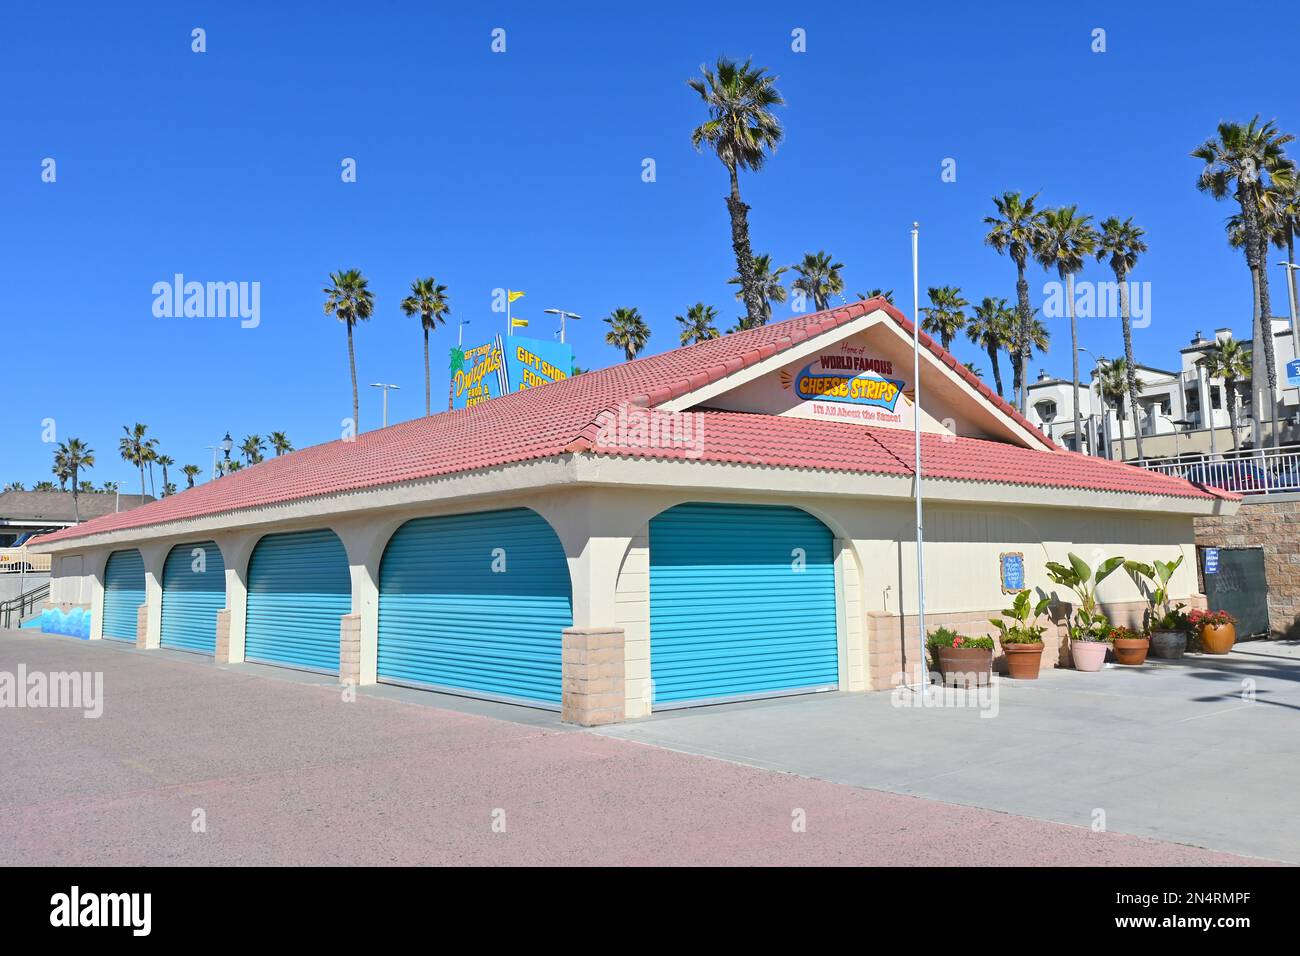 HUNTINGTON BEACH, CALIFORNIA - 7 FEB 2023: Dwights, Concession Stand on the boardwalk near the pier in Huntington Beach. Stock Photo